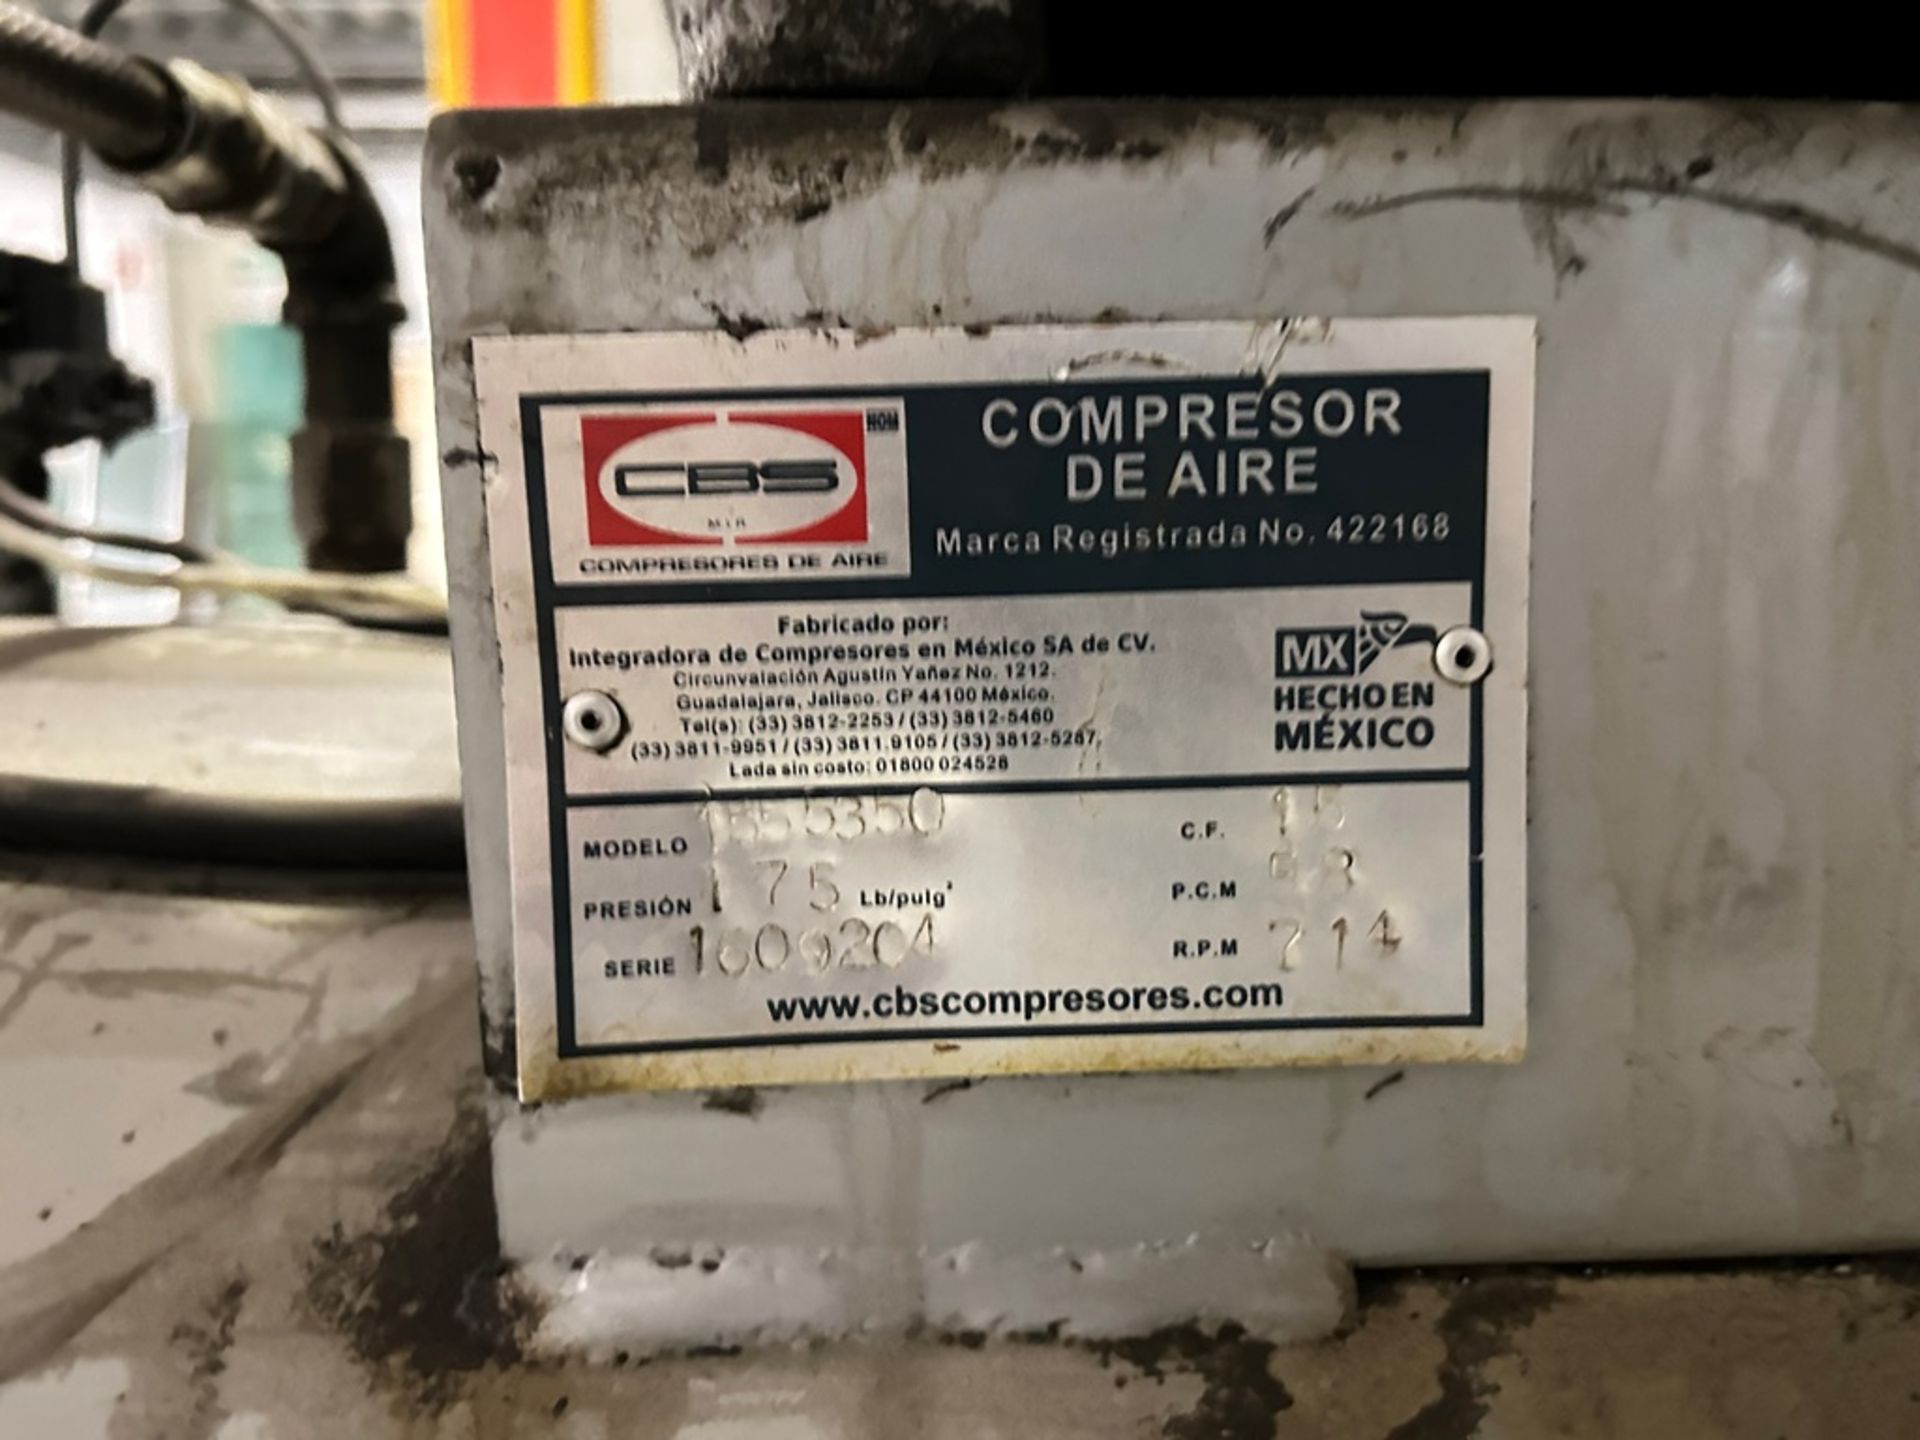 CBS air compressor, Model 1555350, Serial No 1609204, Year 2016, 208-230/460V, Features 15 hp Weg m - Image 11 of 16